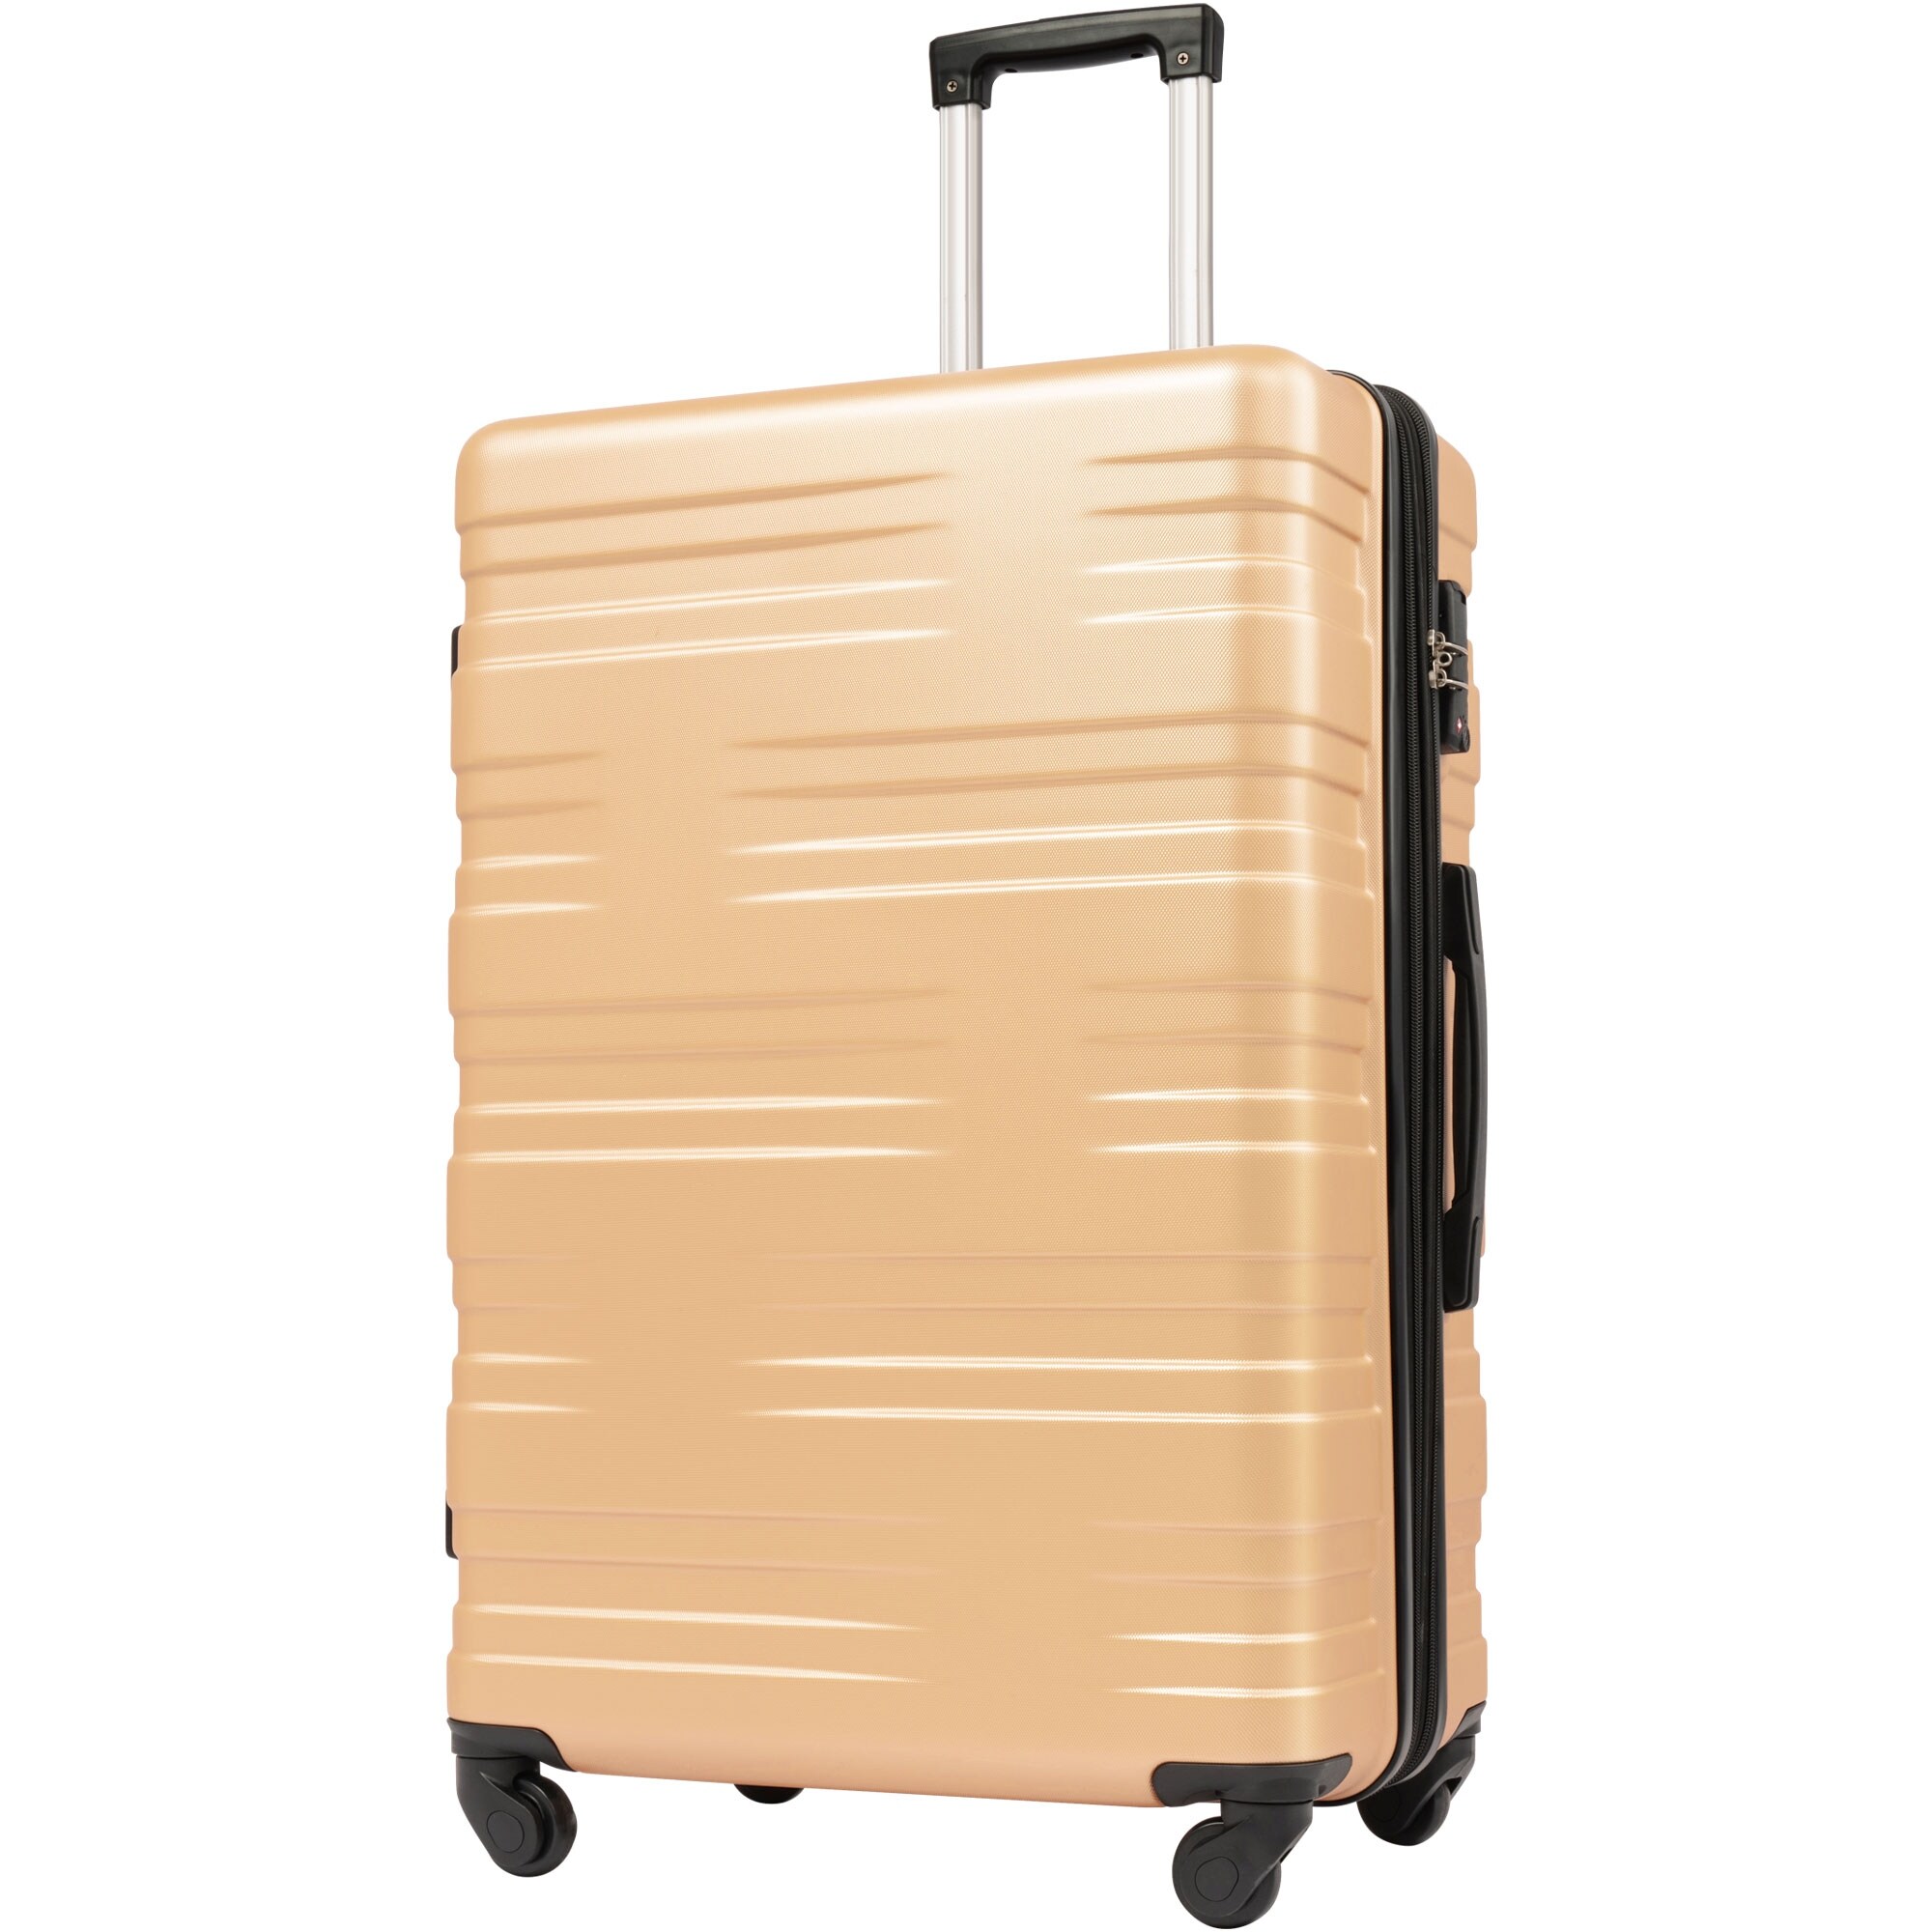 CALPAK 2 piece Trunk Luggage Set, Gold, Hard Case Spinner